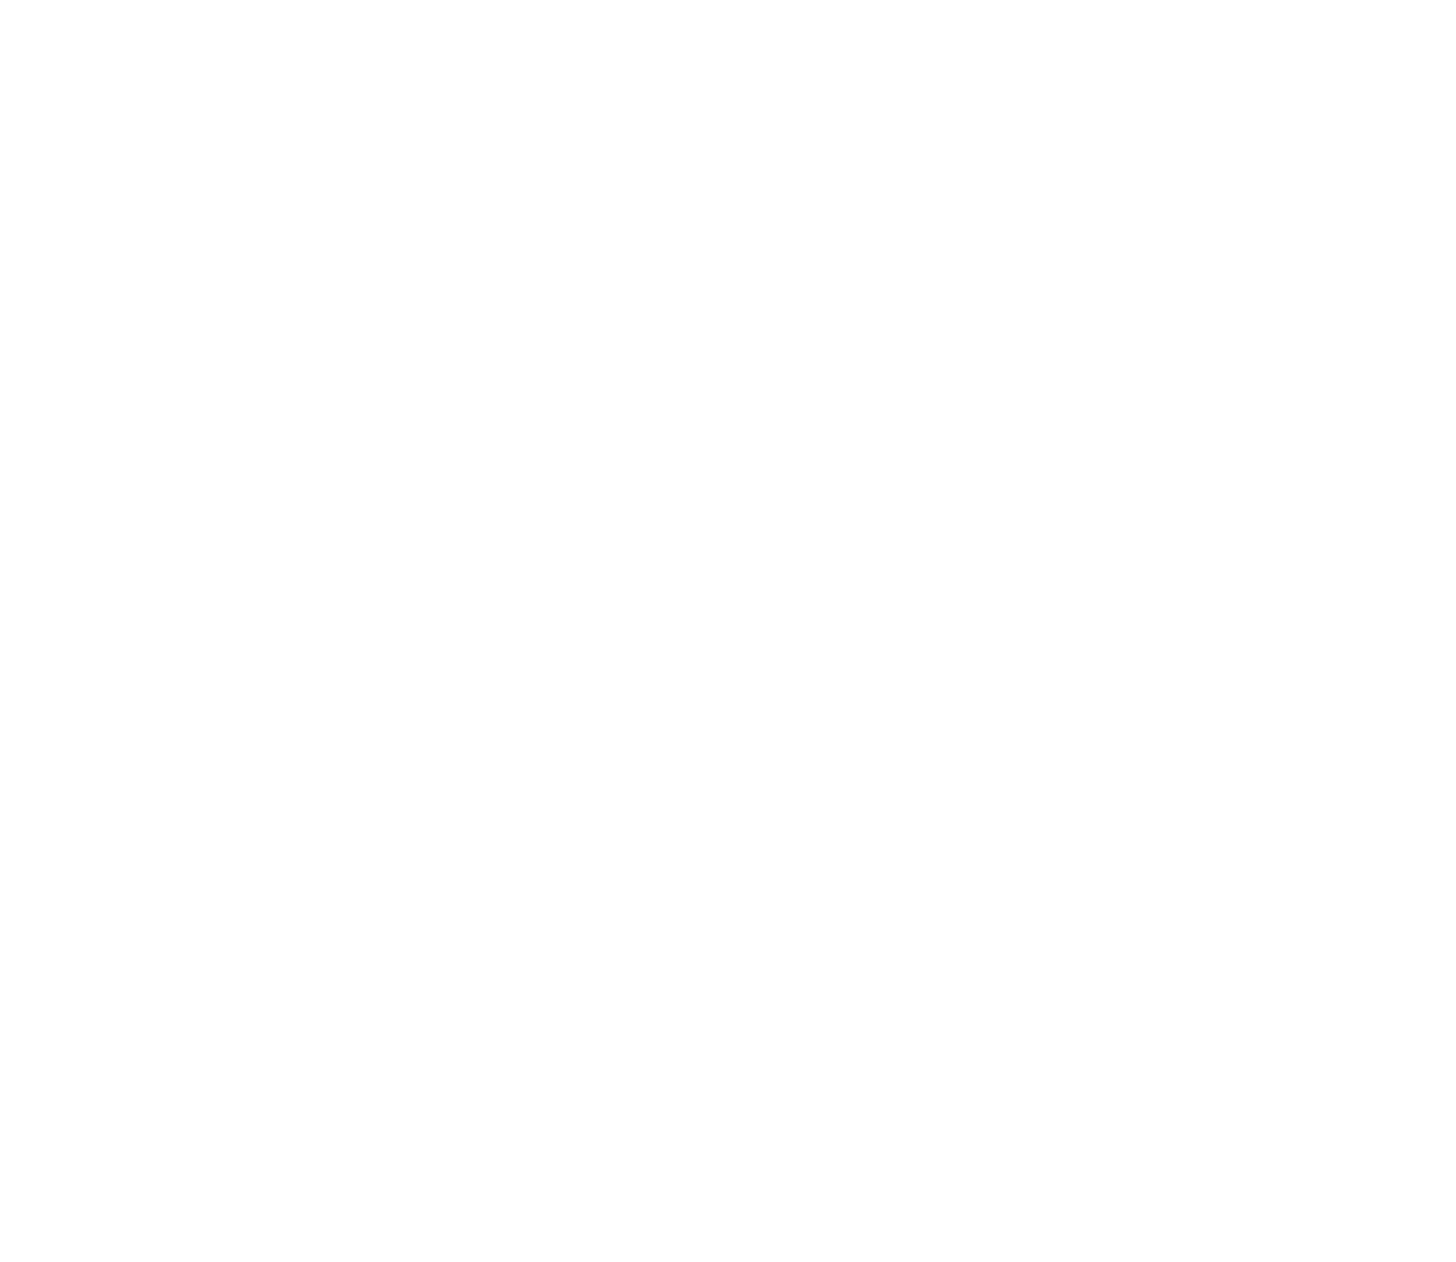 TriangleTheoryFitness_Watermark1